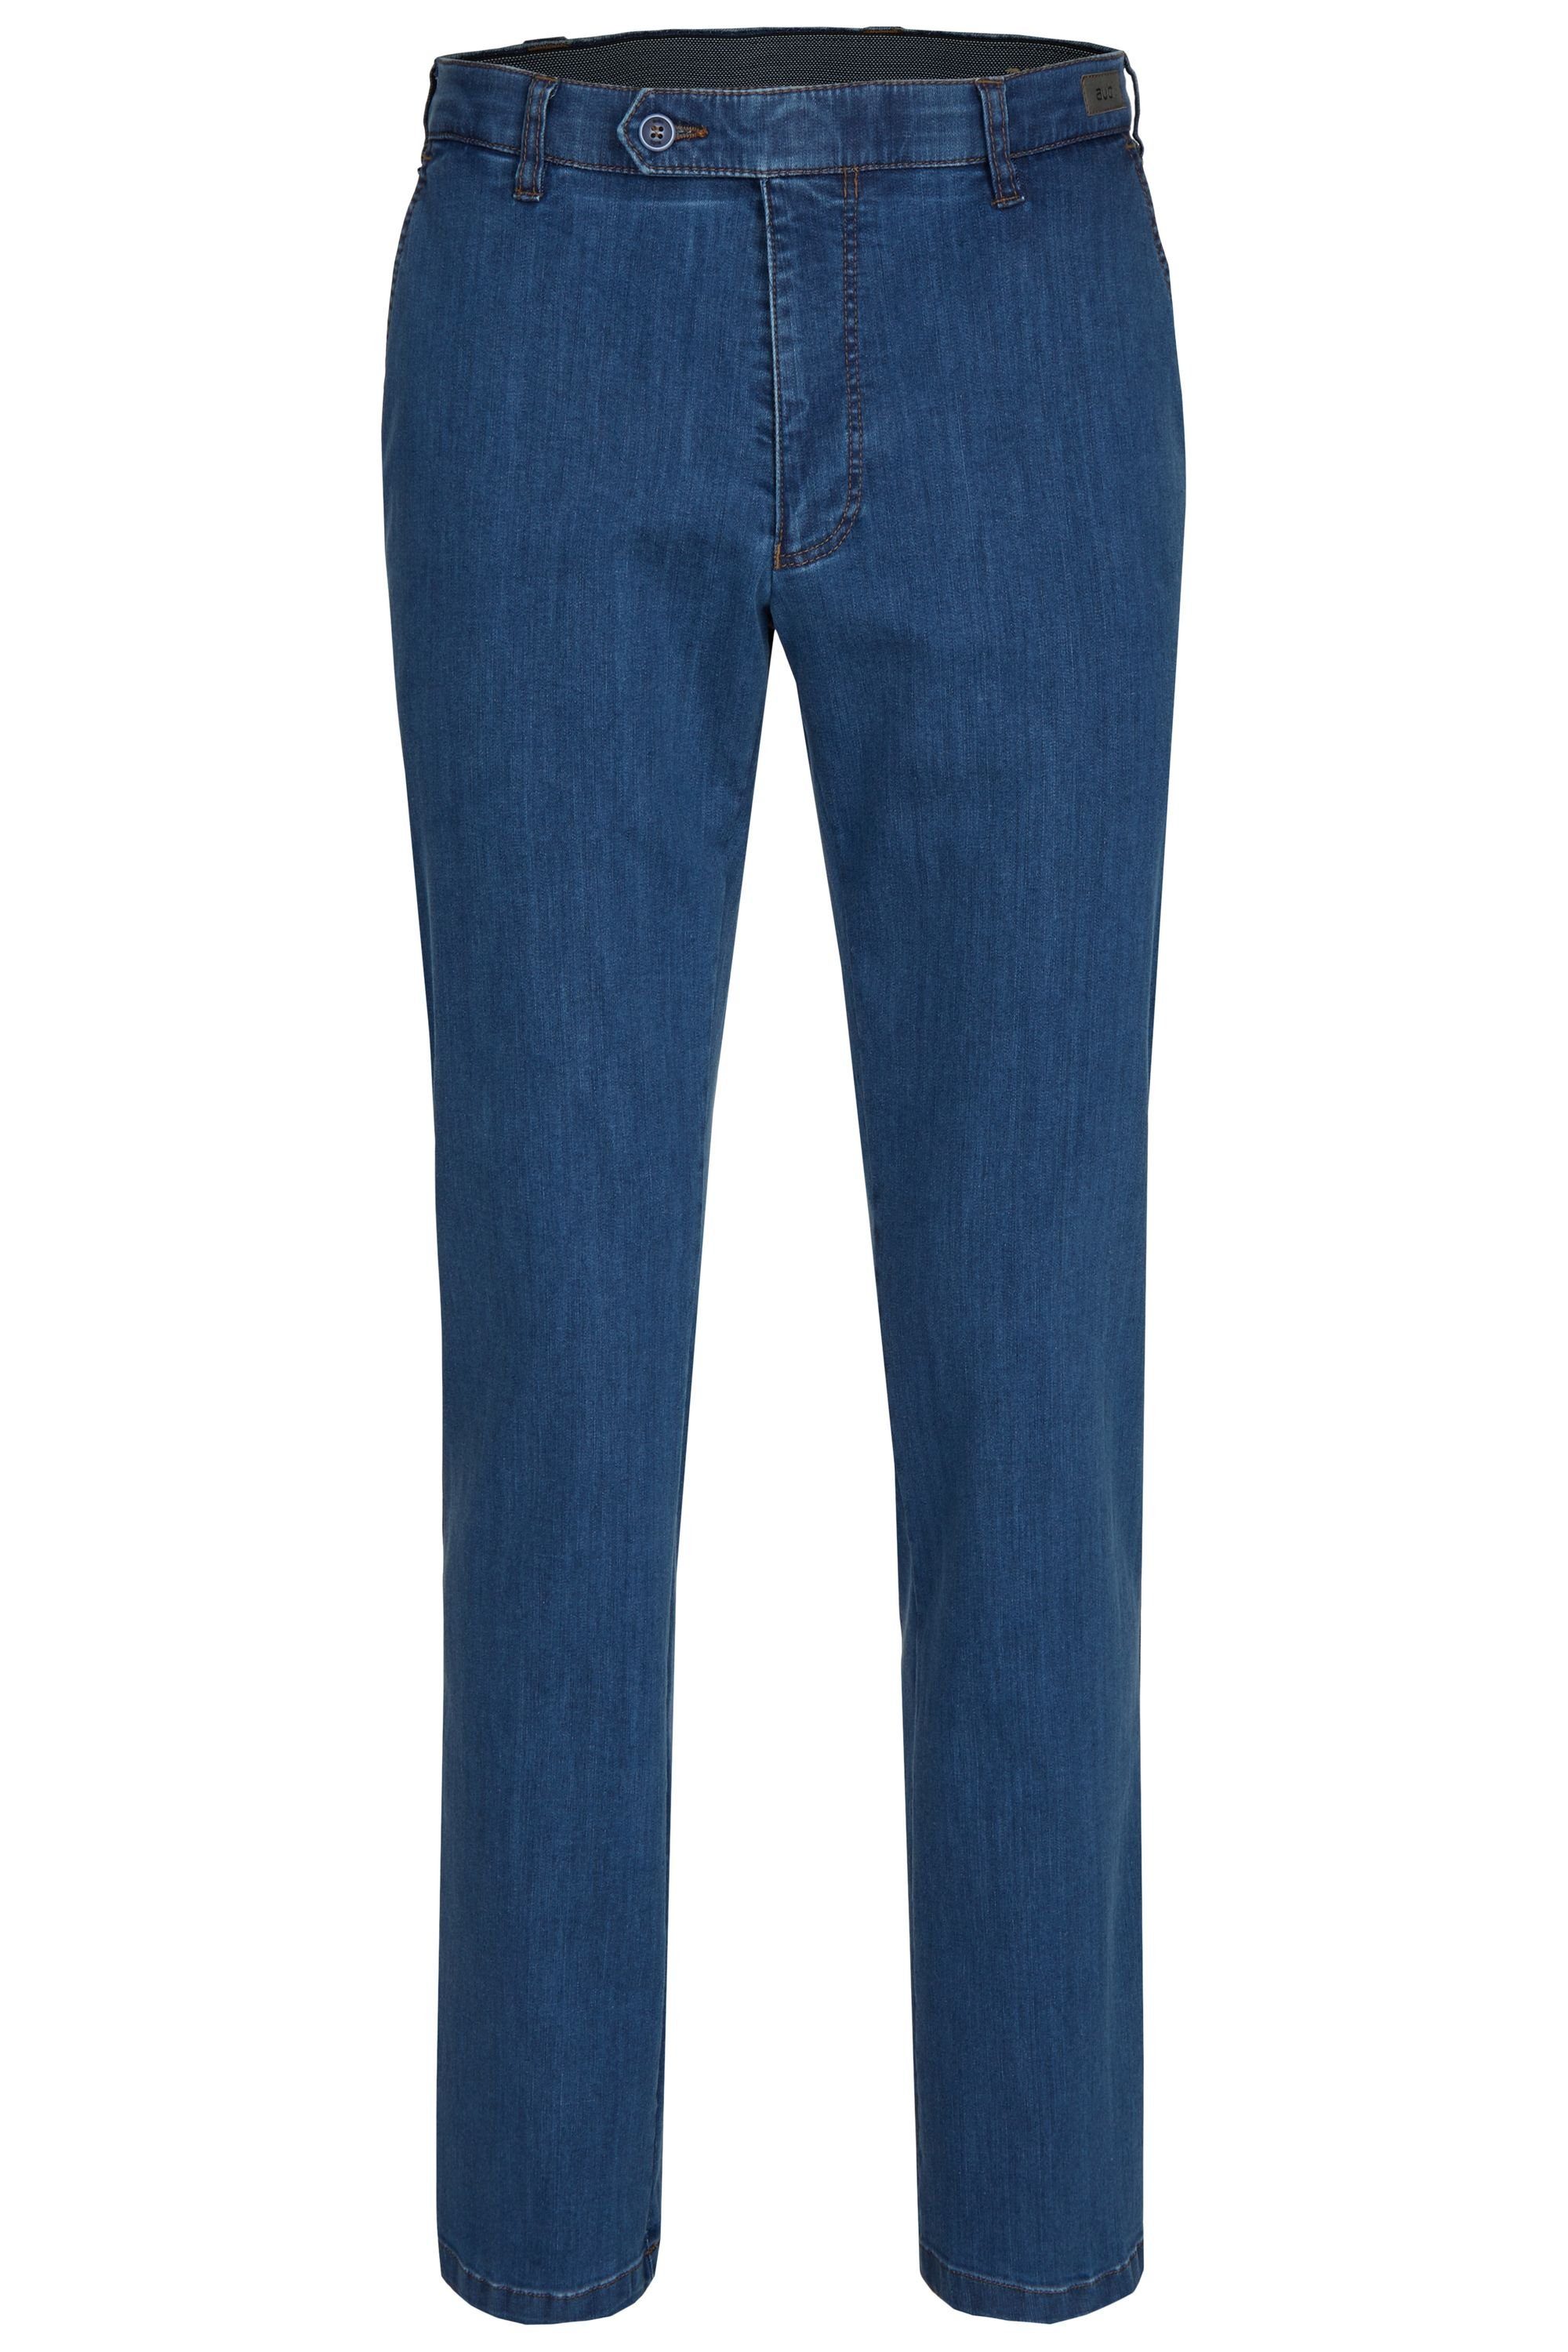 aubi: Bequeme Jeans aubi Perfect Fit Herren Sommer Jeans Hose Stretch aus Baumwolle High Flex Modell 526 stone (46) | Jeans